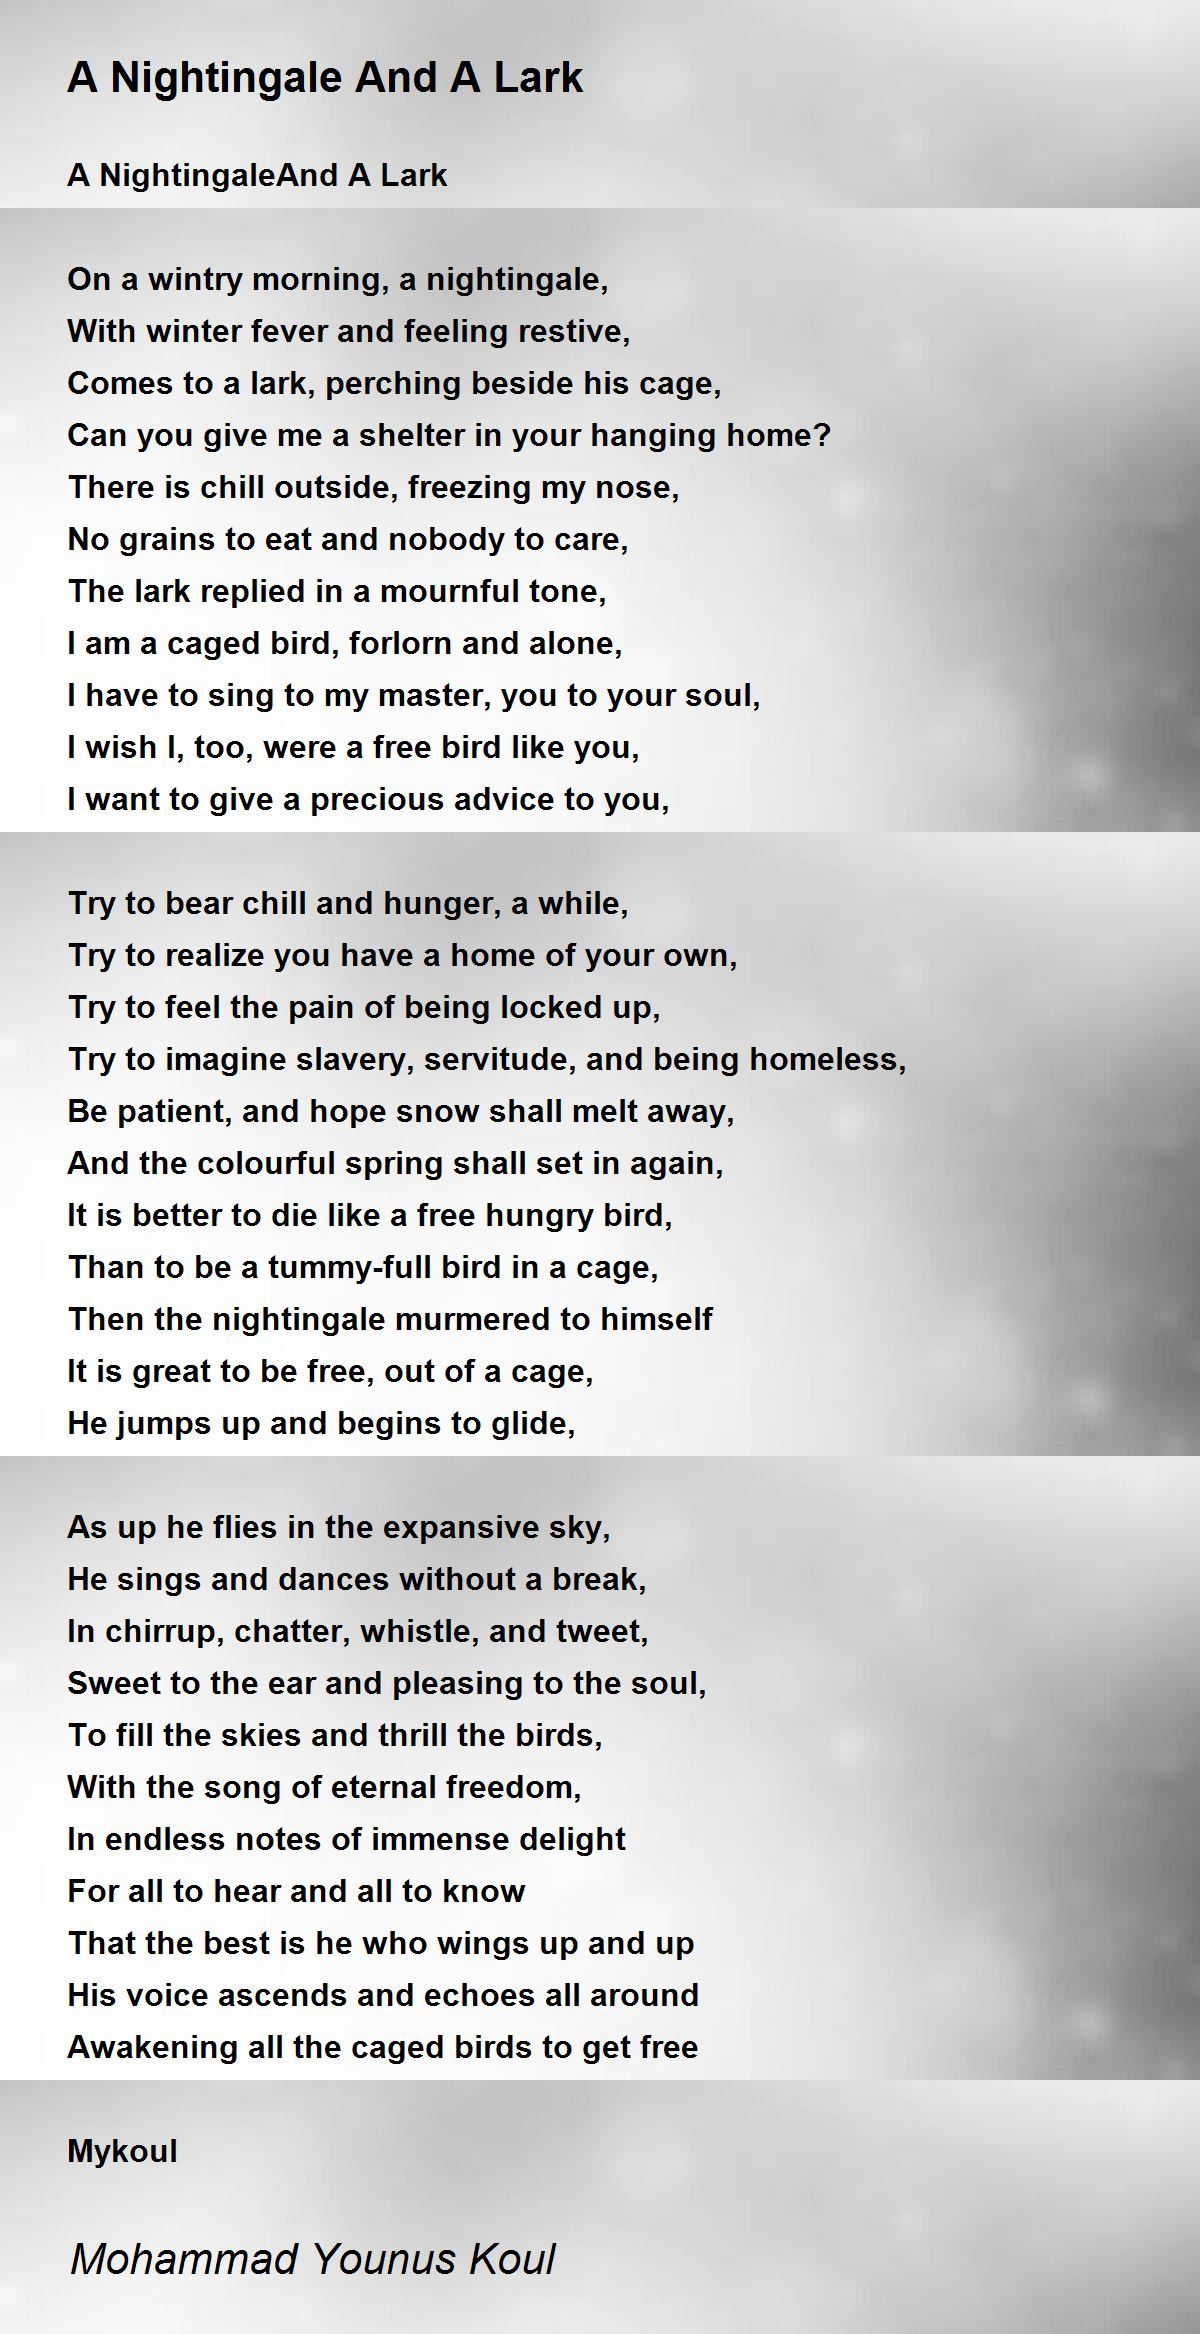 Nightingale Calls - Nightingale Calls Poem by Mohammad Younus